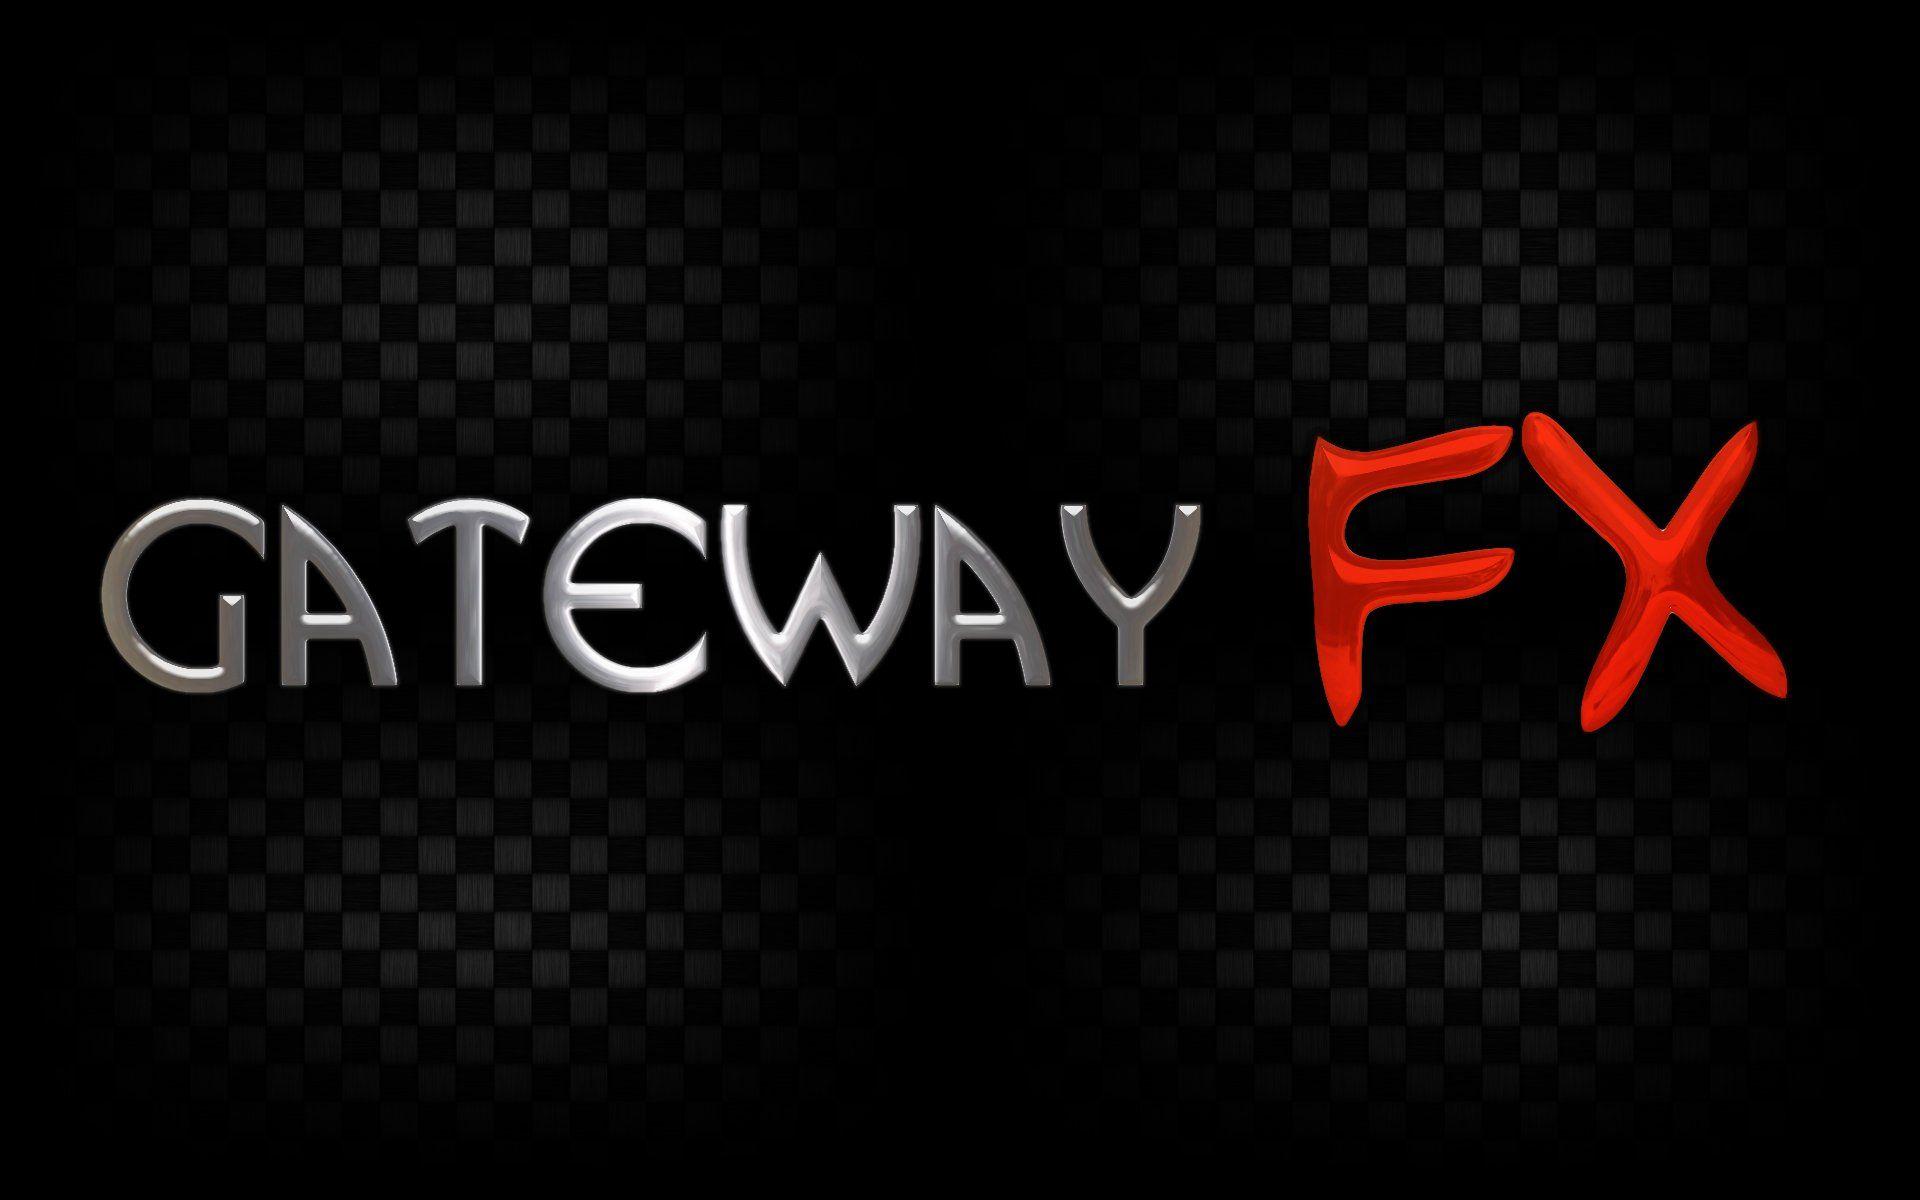 Gateway Wallpaper, Interesting Gateway HDQ Image Collection, HQ